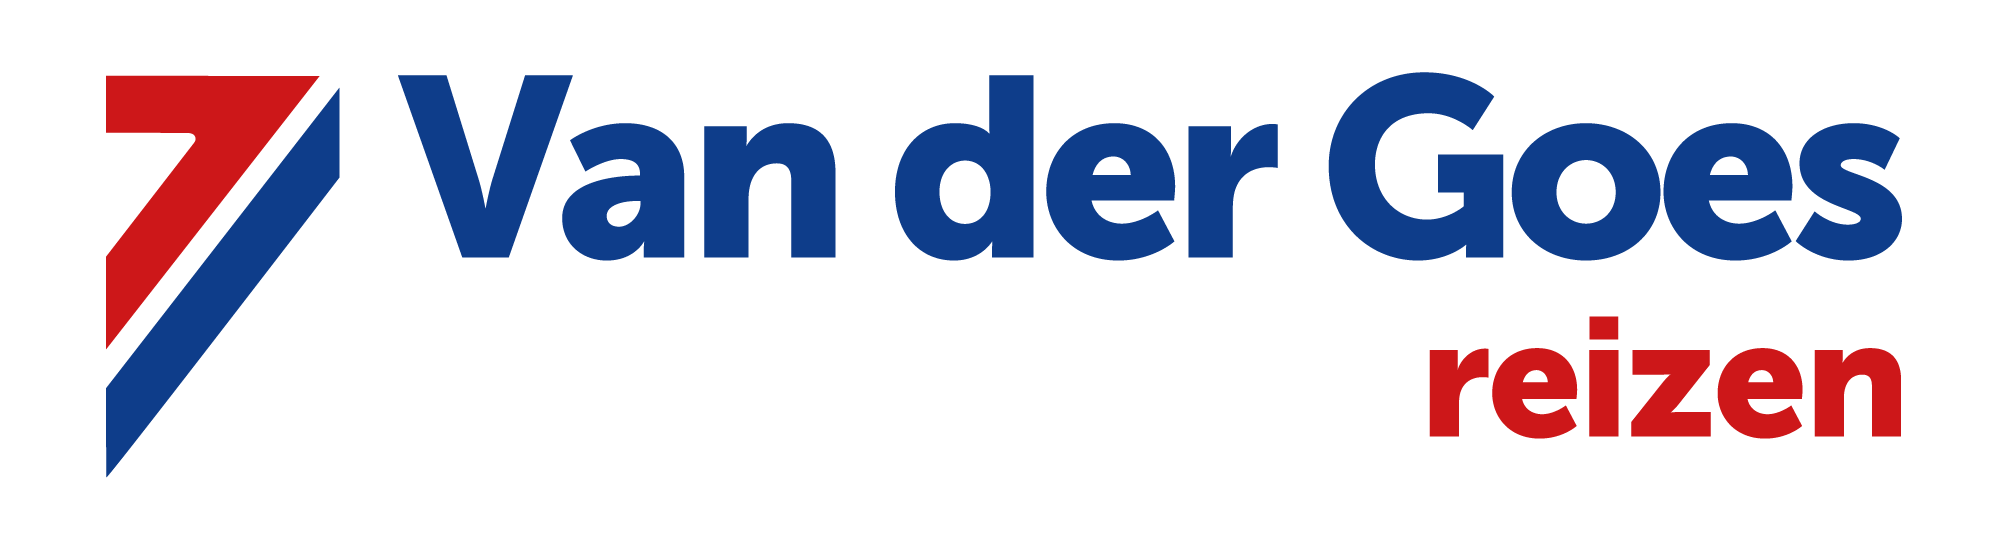 vandergoes-logo